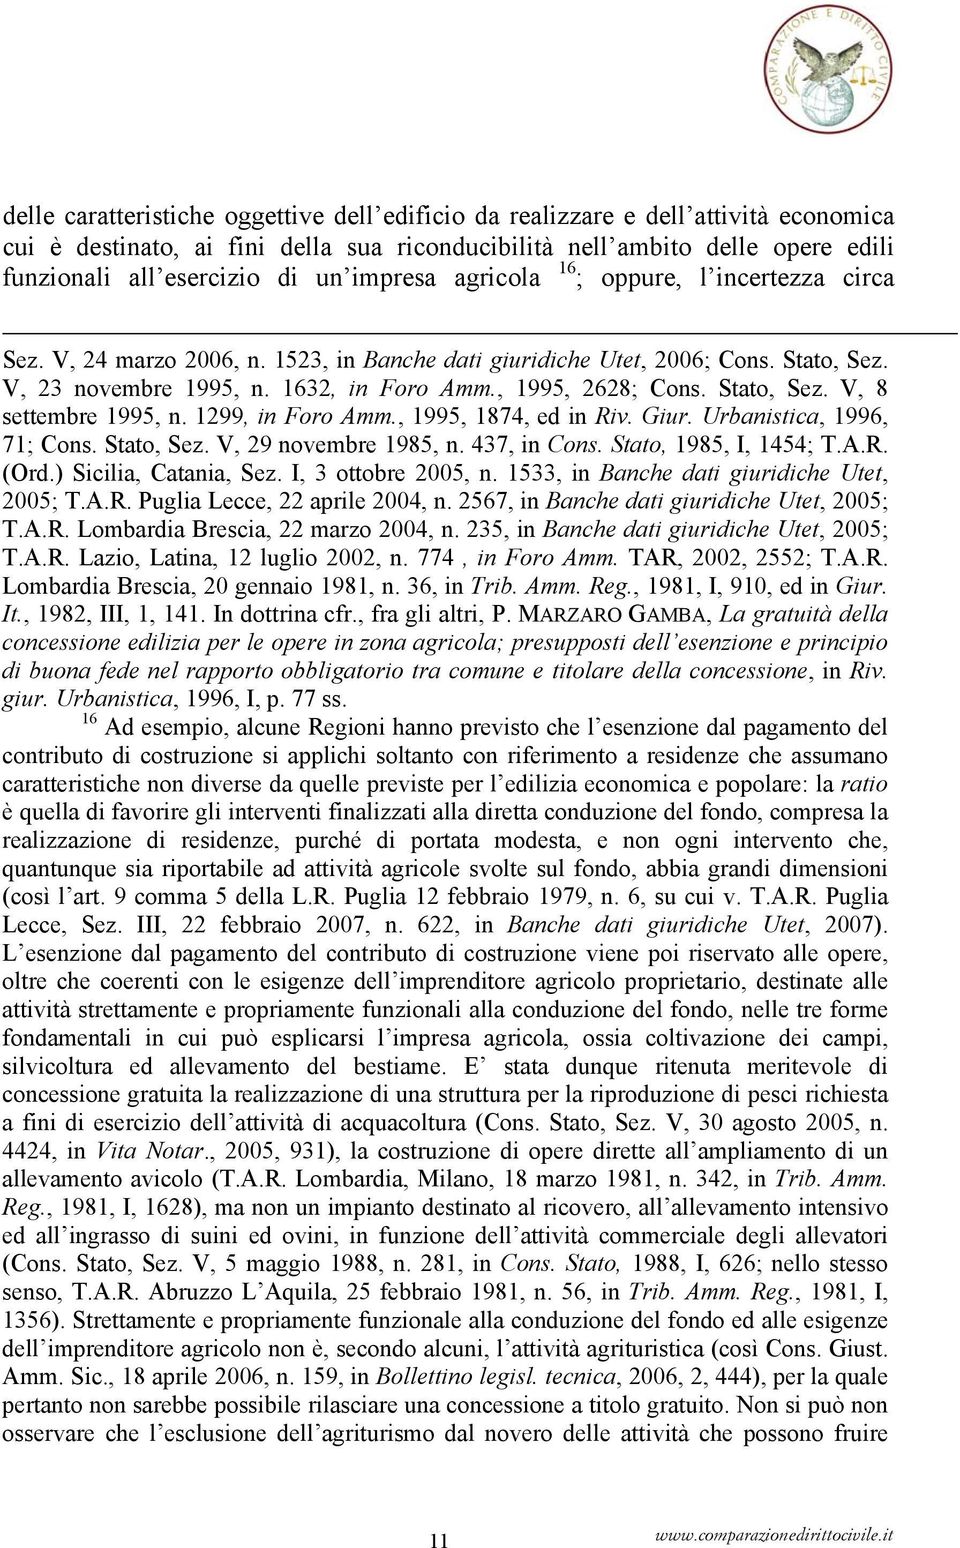 Stato, Sez. V, 8 settembre 1995, n. 1299, in Foro Amm., 1995, 1874, ed in Riv. Giur. Urbanistica, 1996, 71; Cons. Stato, Sez. V, 29 novembre 1985, n. 437, in Cons. Stato, 1985, I, 1454; T.A.R. (Ord.